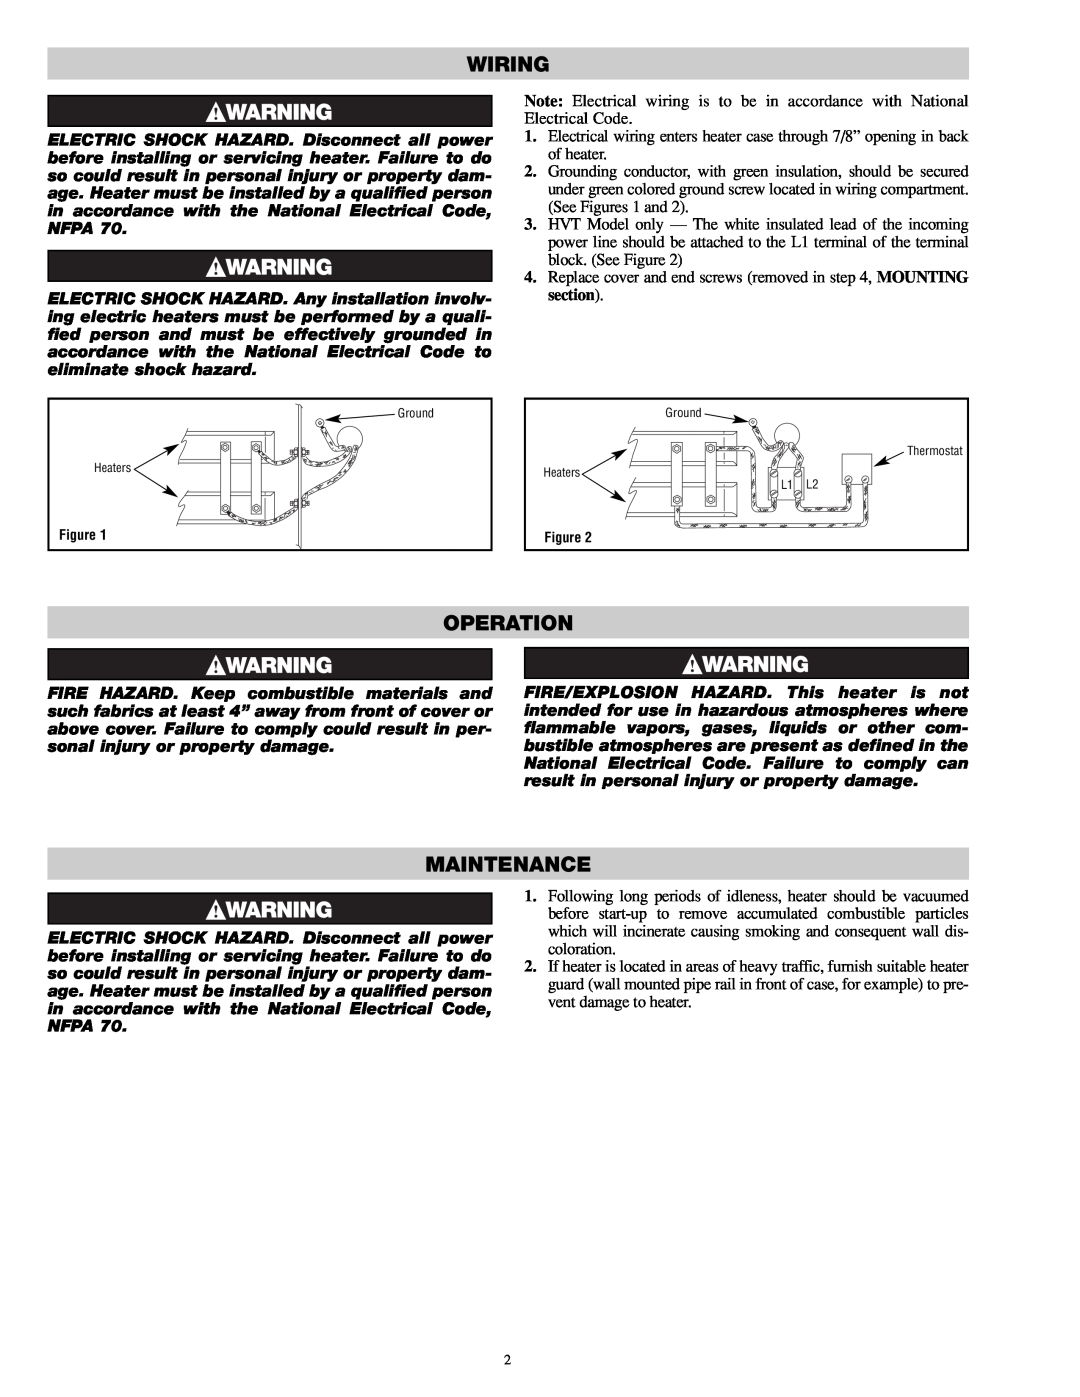 Chromalox PF421-6 specifications Wiring, Operation, Maintenance 